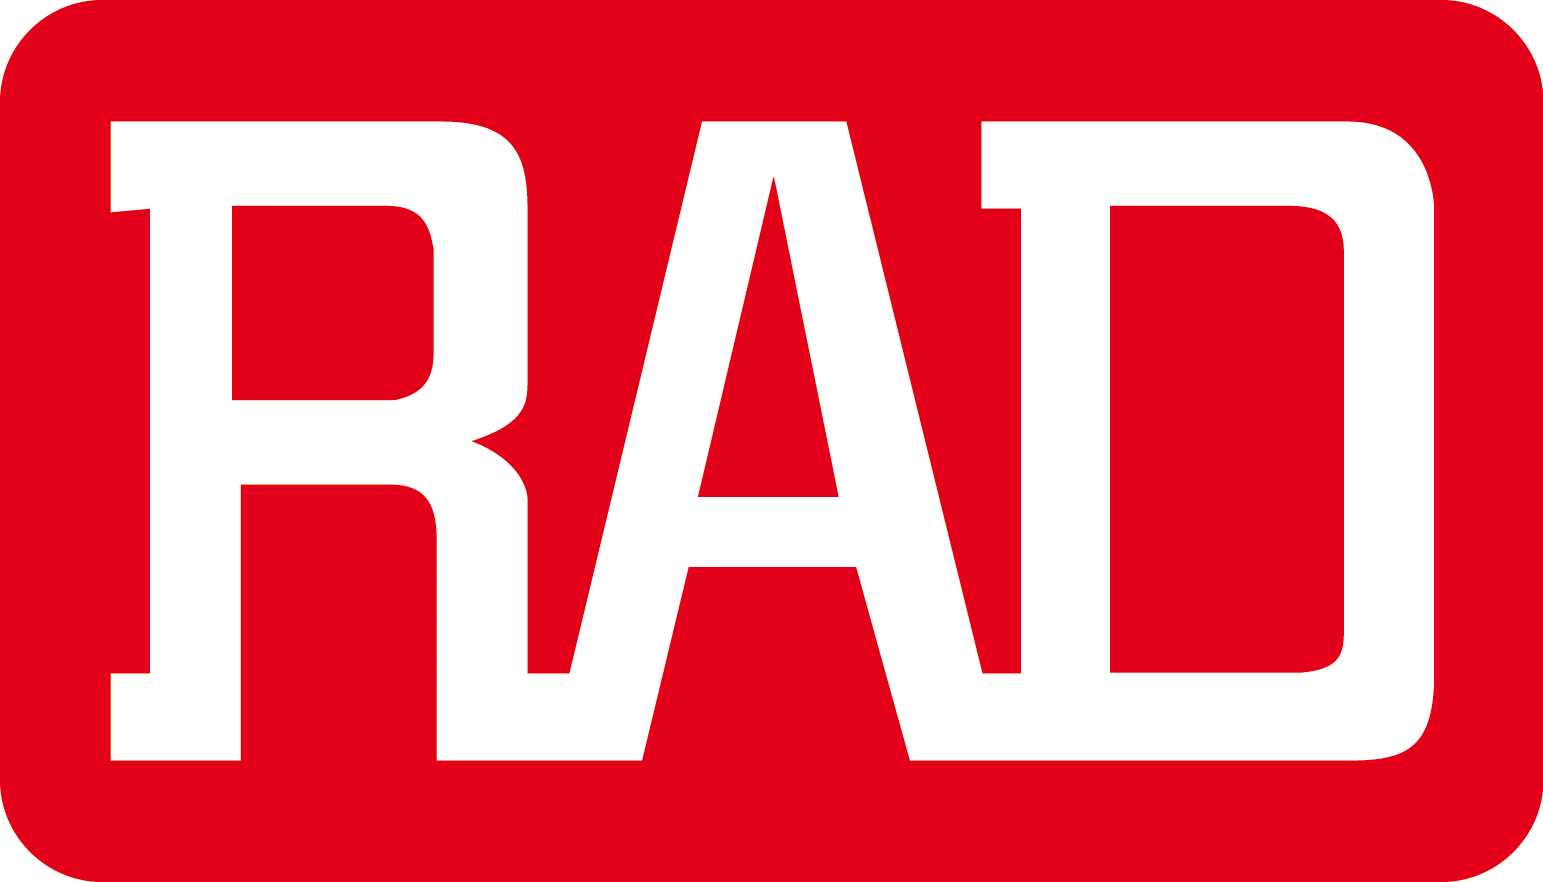 rad logo